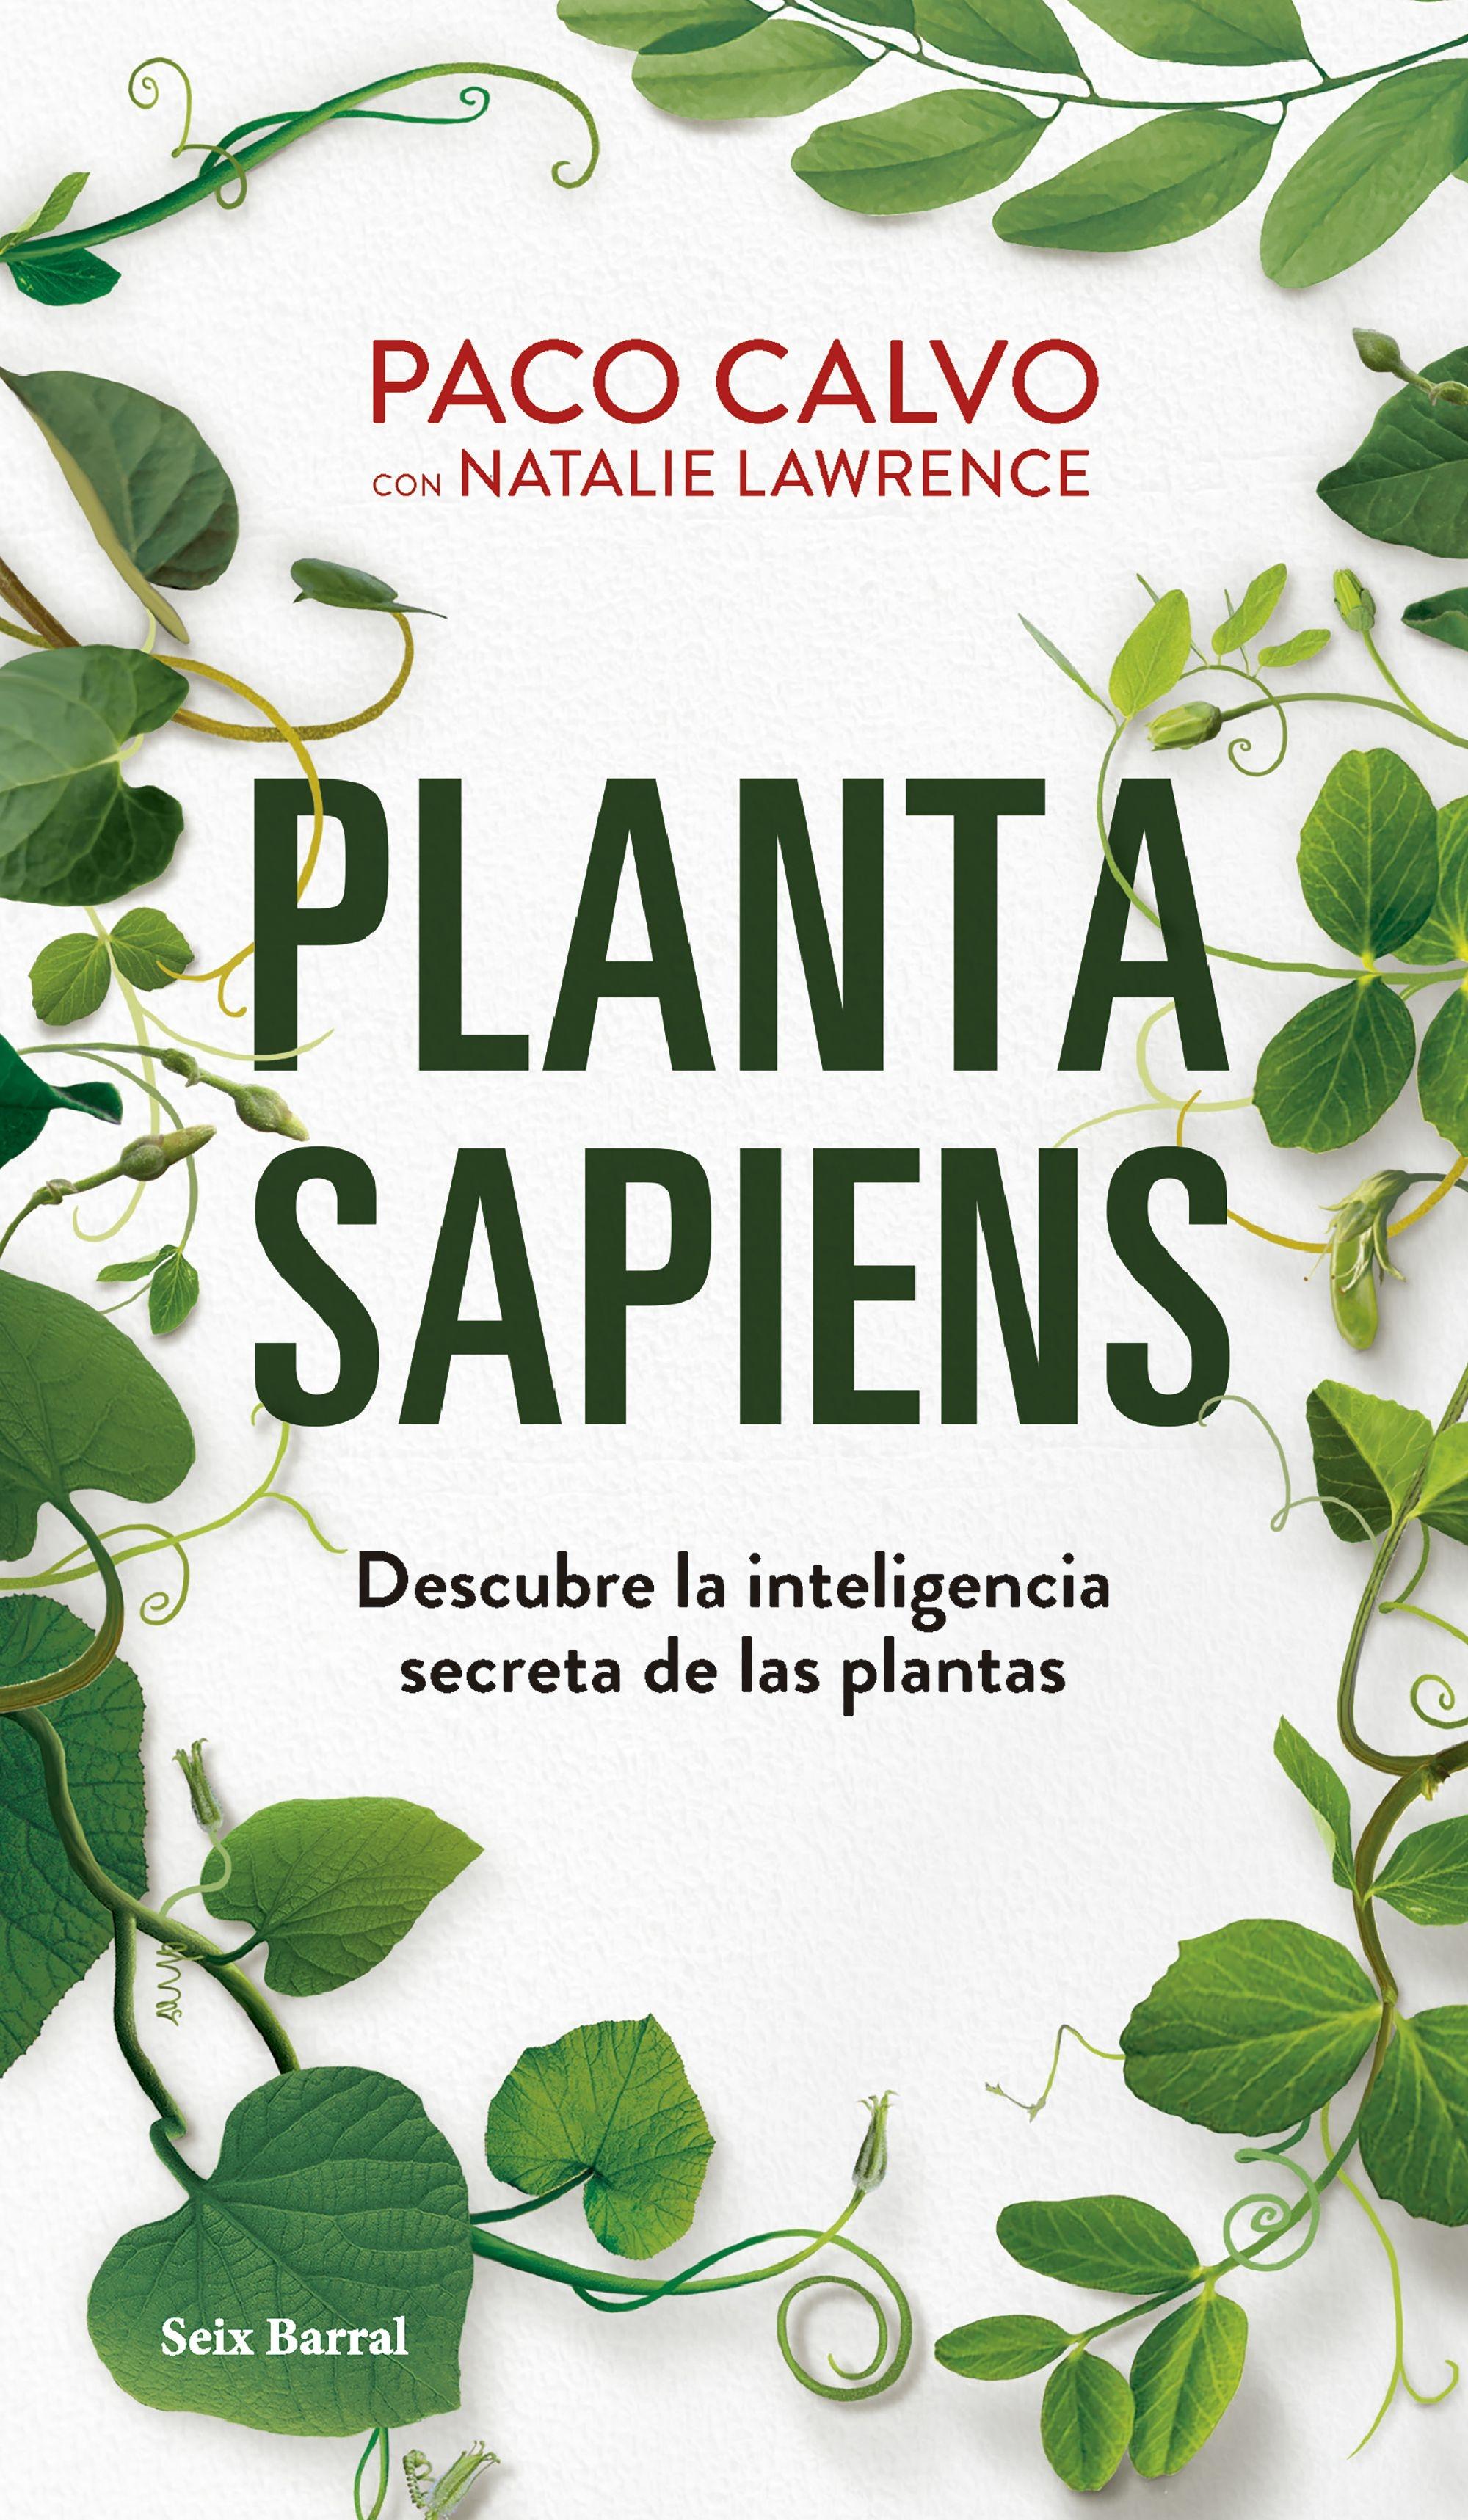 Planta sapiens "Descubre la inteligencia secreta de las plantas"